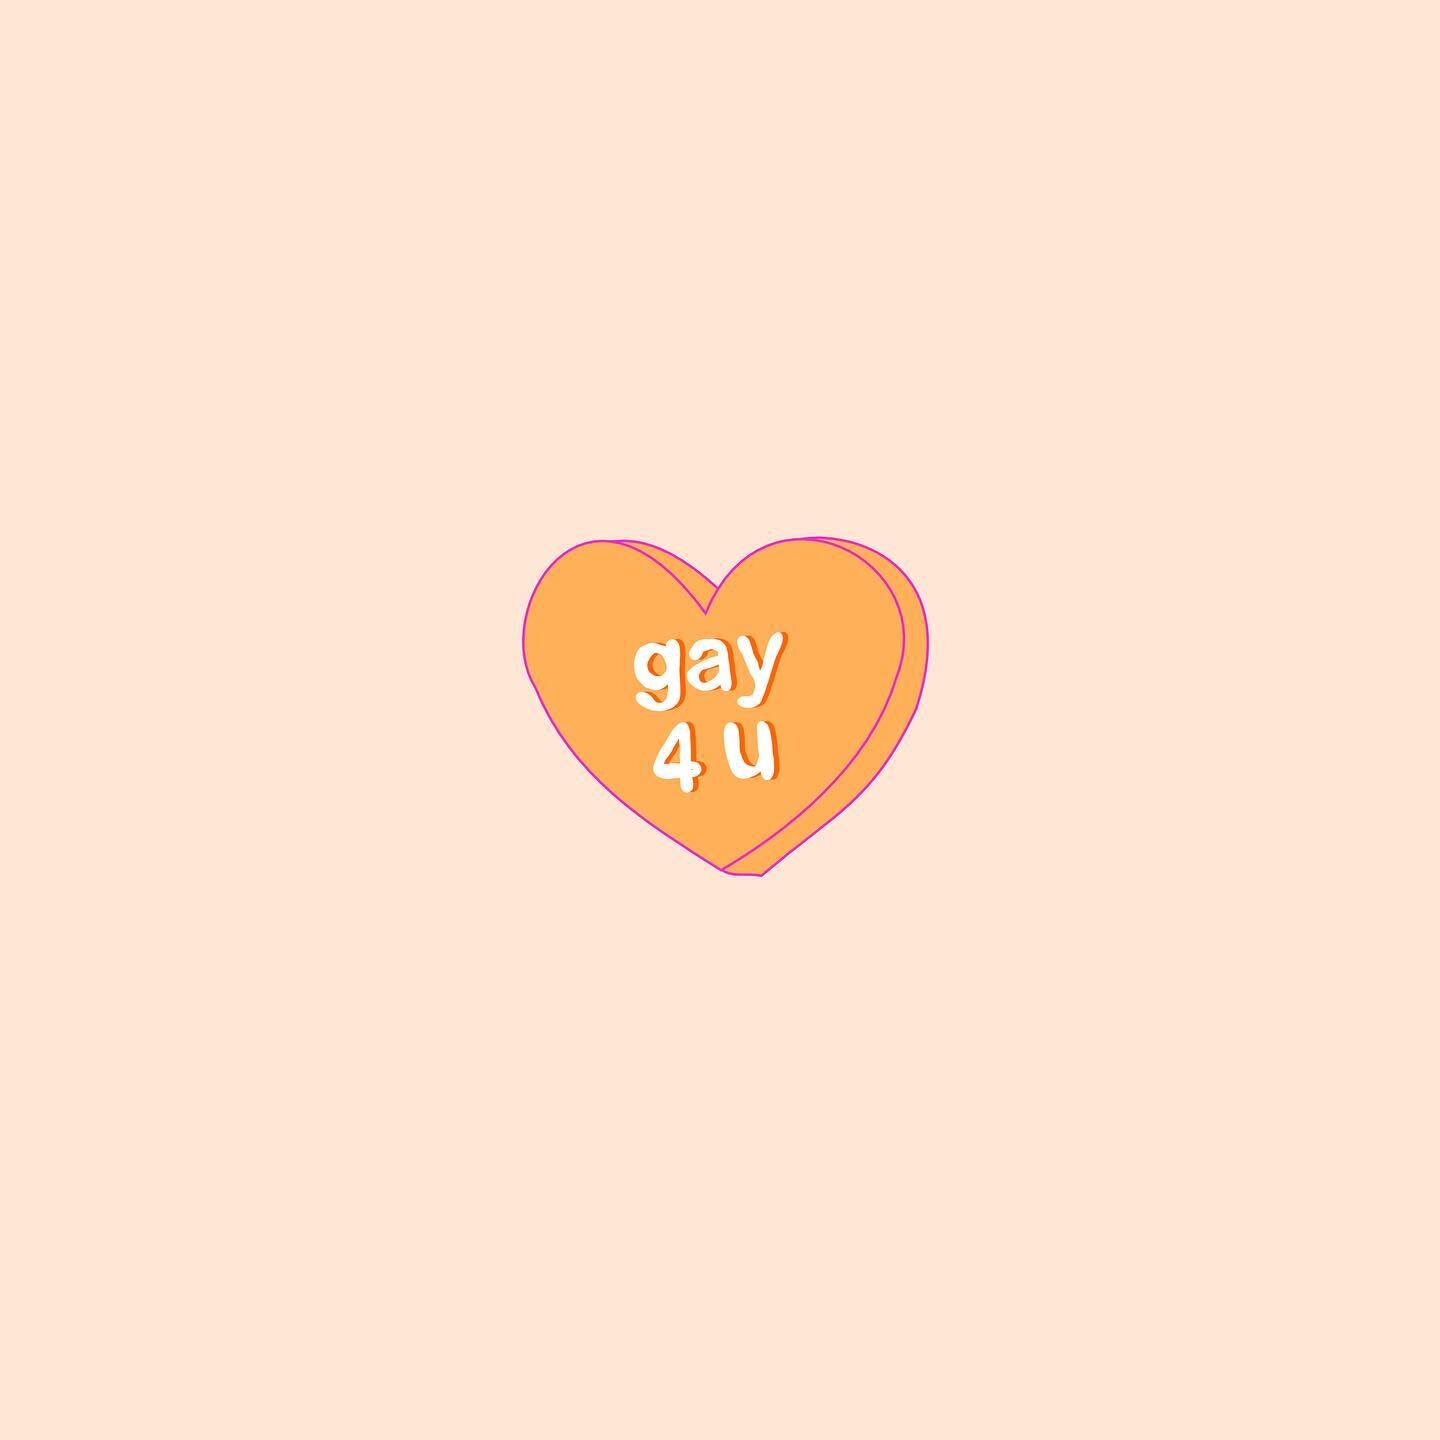 Happy #Pride, y&rsquo;all! 🍬

#GayAF #Gay4Gay #DykesOfInstagram #WomenWhoDraw #GayArt #QueerArt #HeartCandy #Illo #WLW #PrideMonth